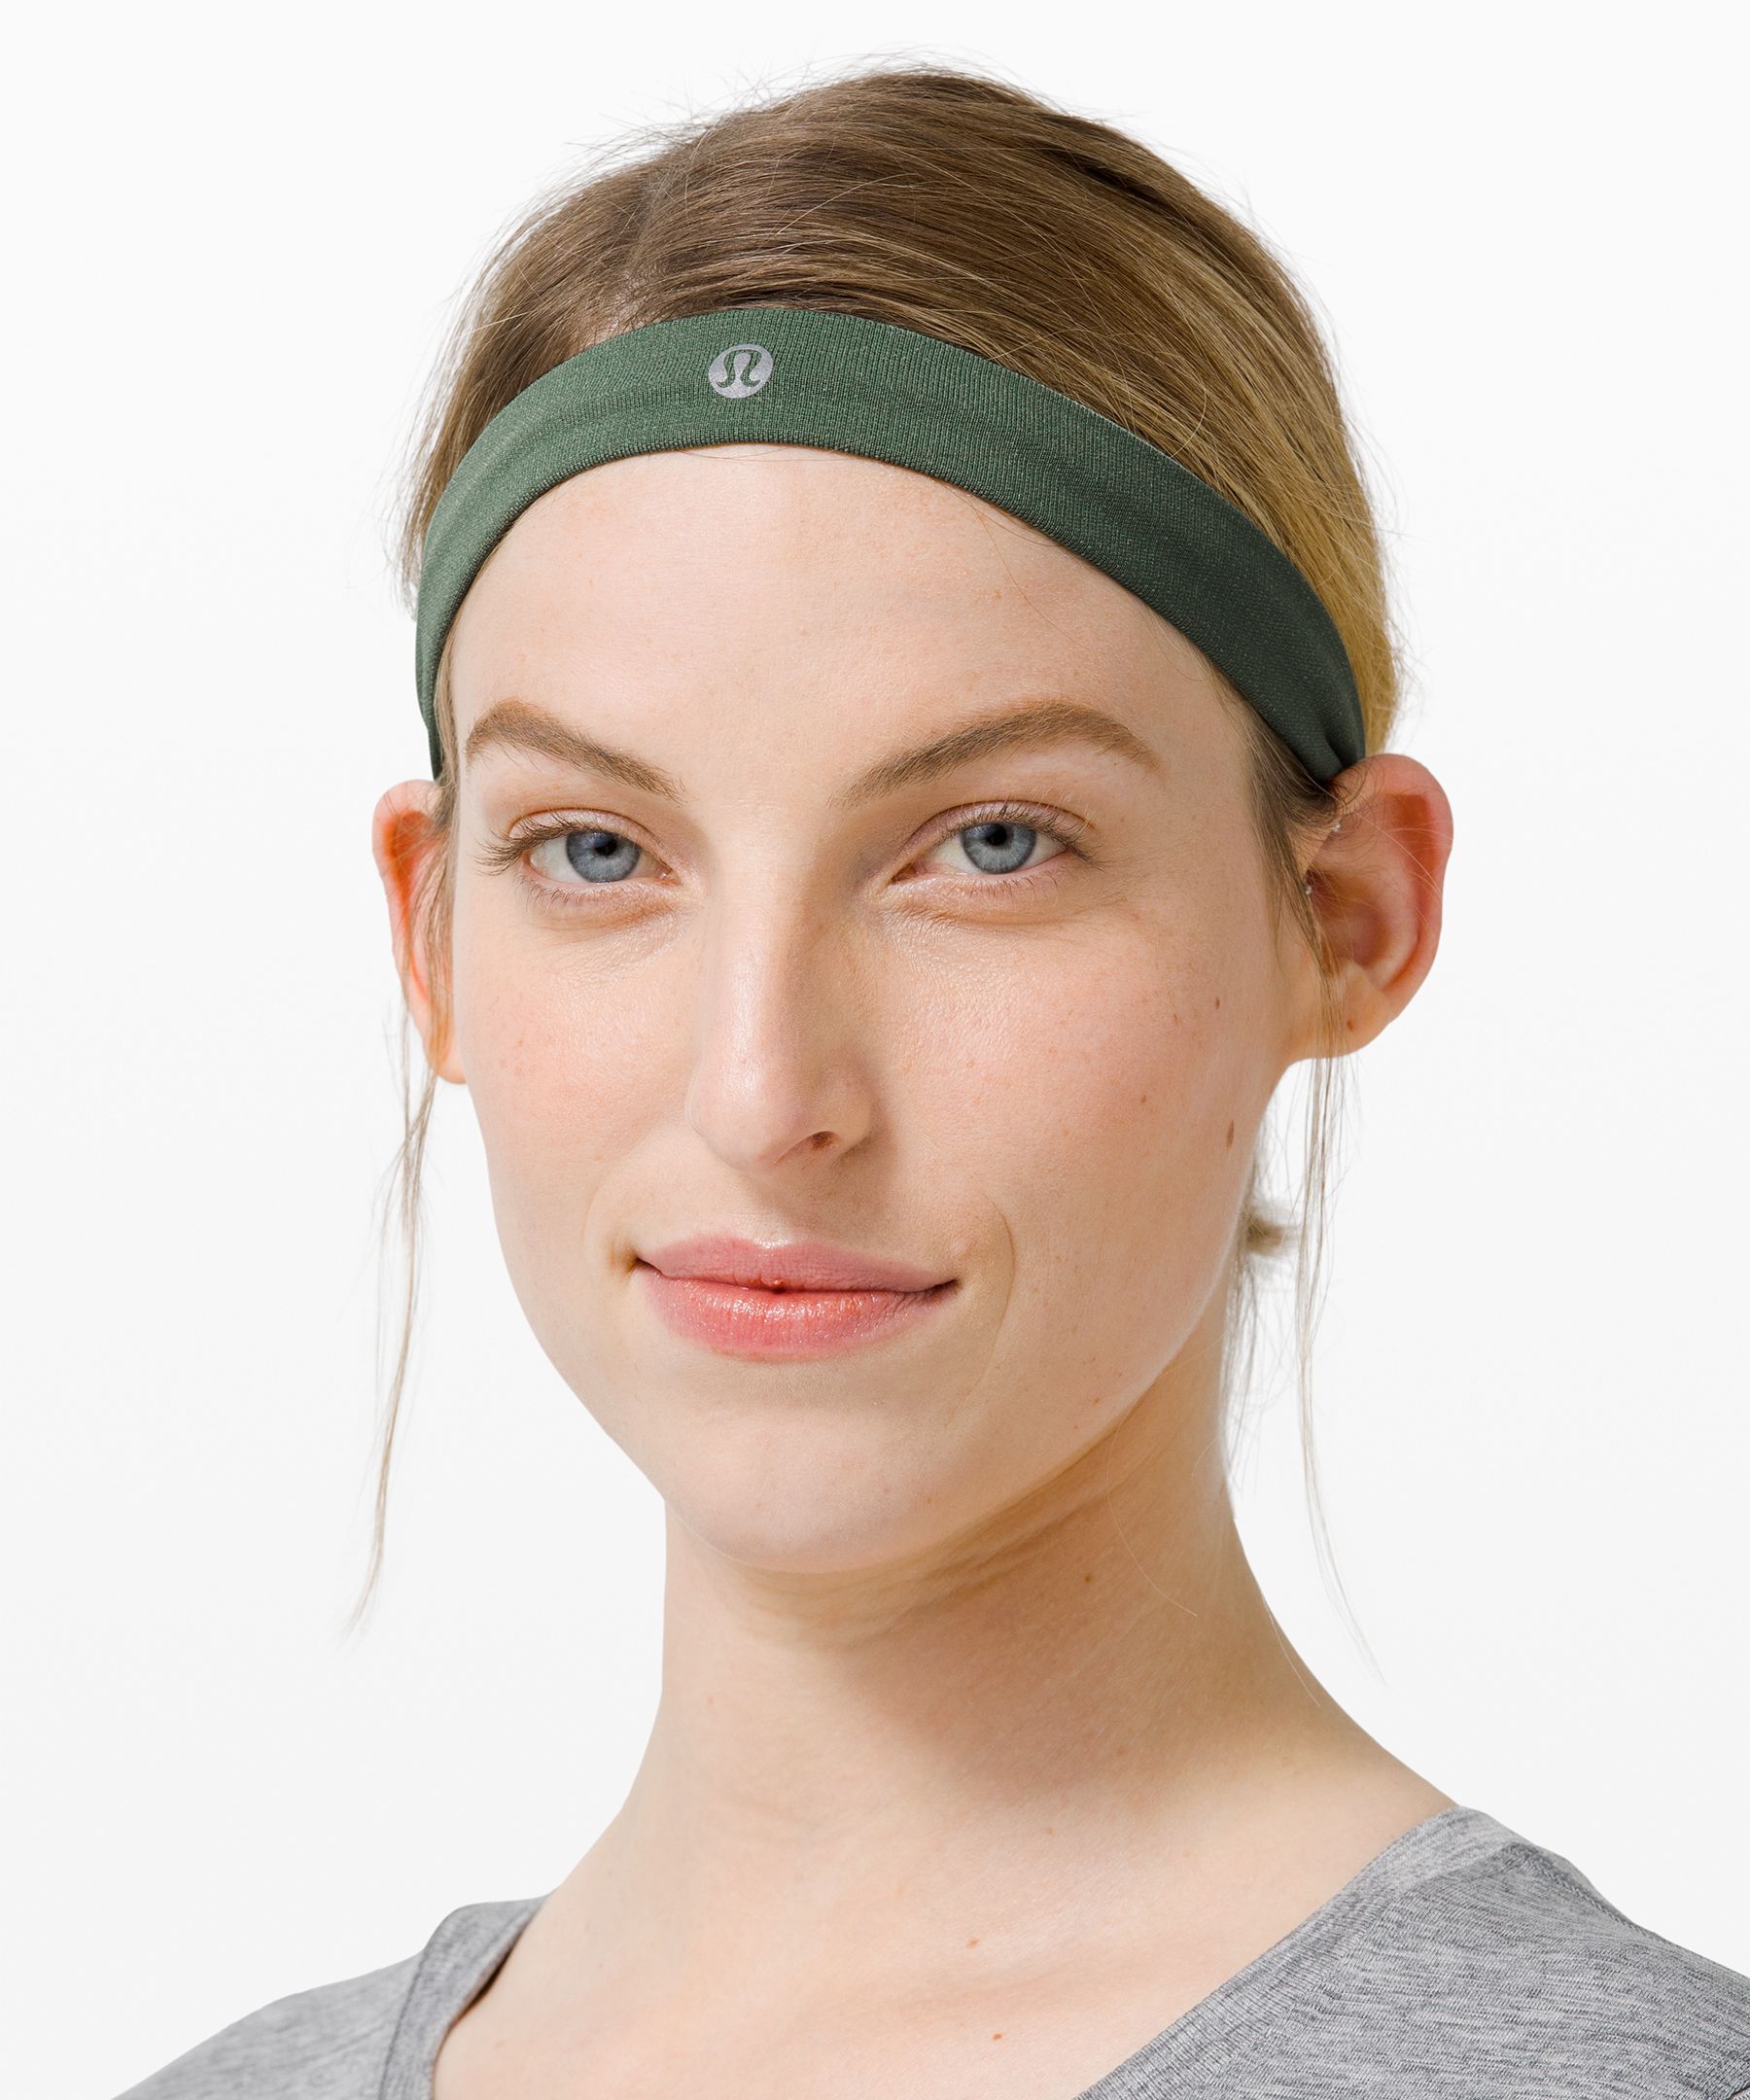 Lululemon Cardio Cross Trainer Headband In Algae Green/springtime